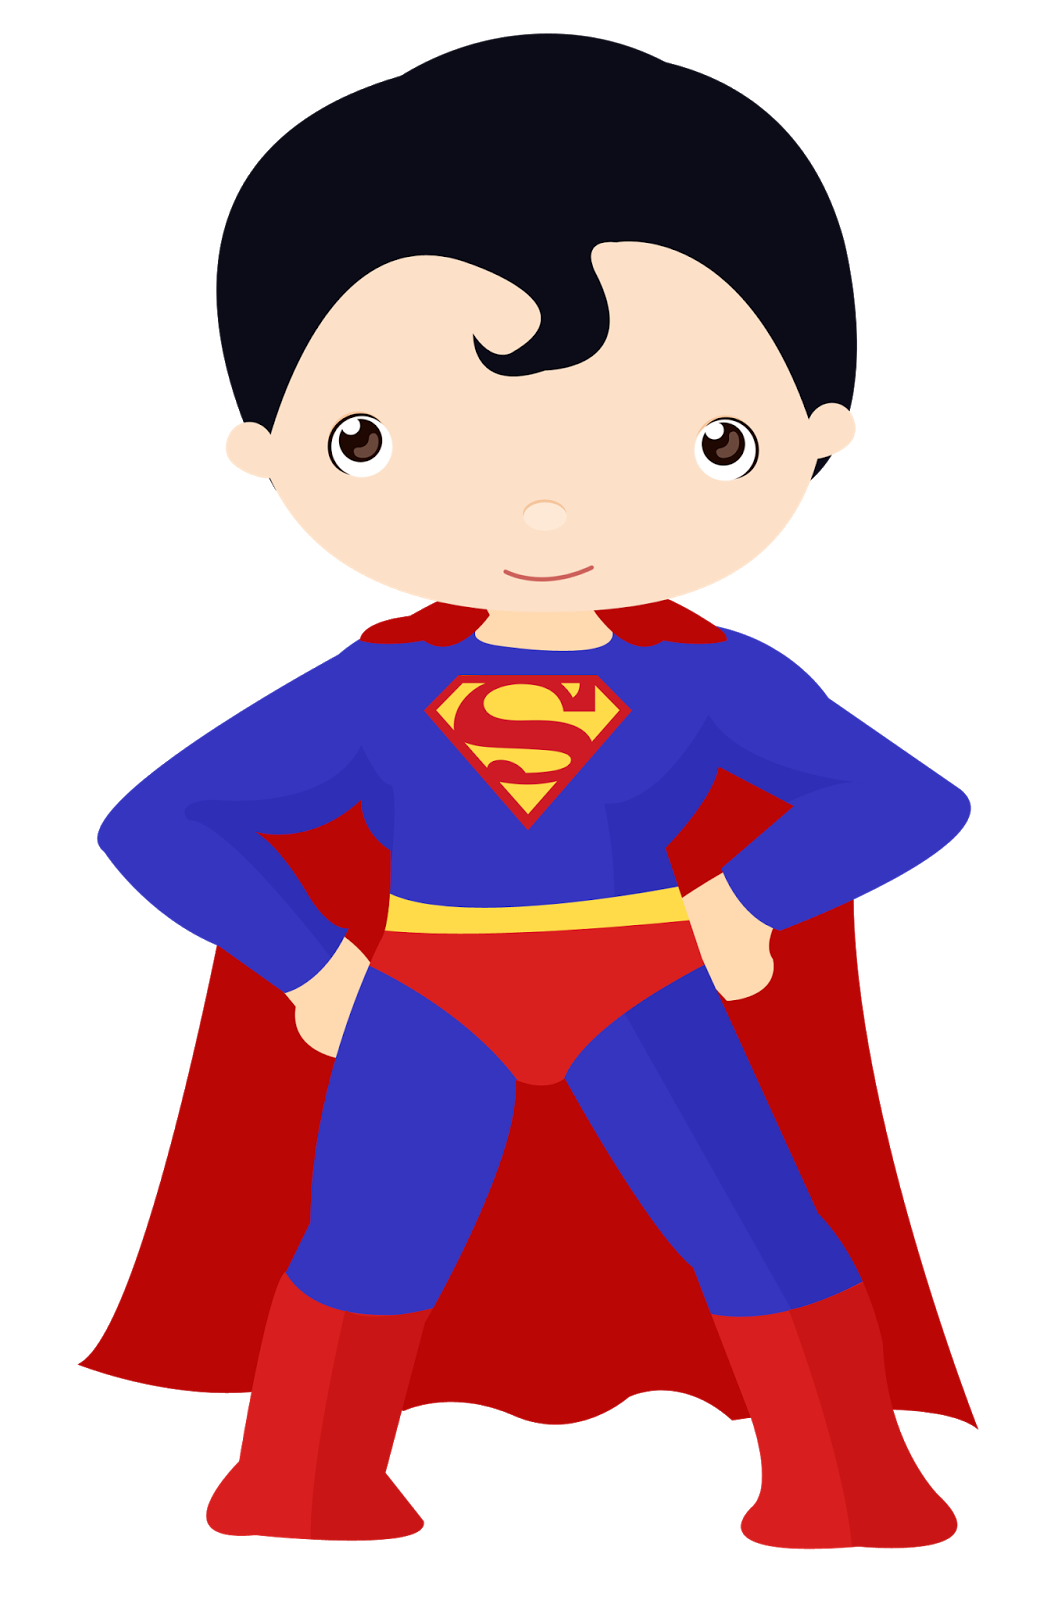 Atom Man vs Superman - FANDOM powered by Wikia